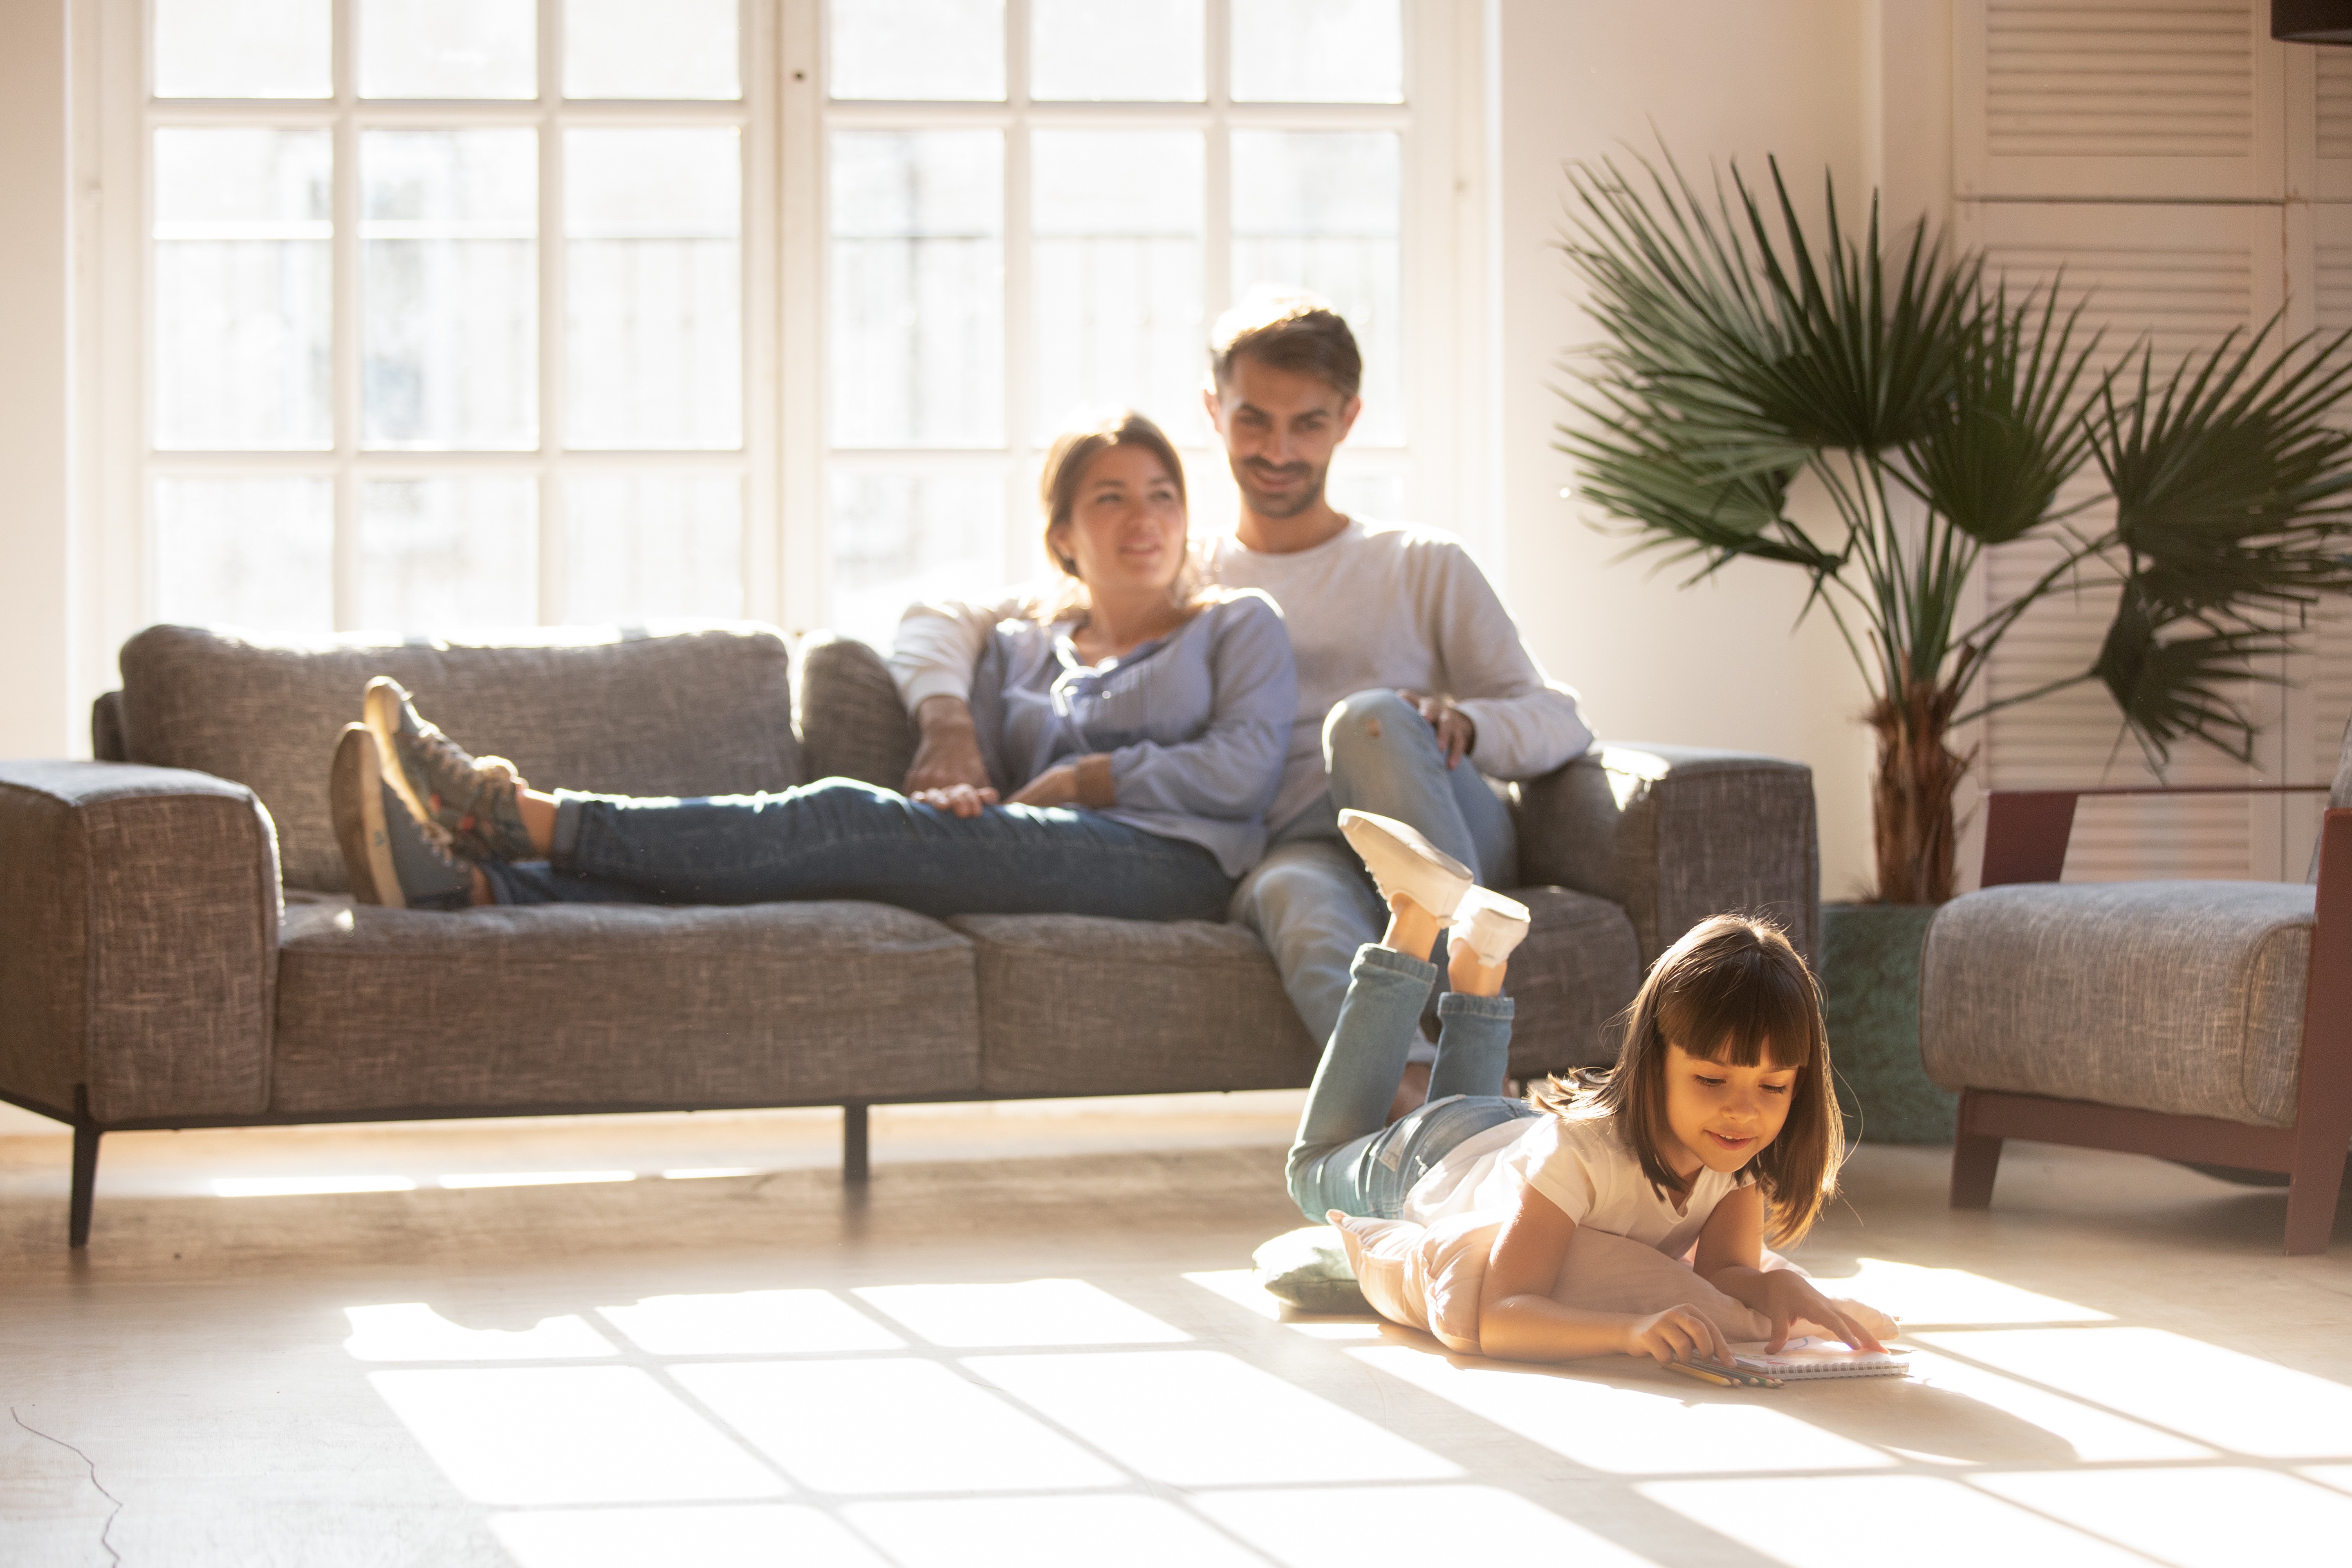 Watching their lives. Семья на диване. Счастливая семья на диване. Семейная фотосессия на диване. Диван для детей.